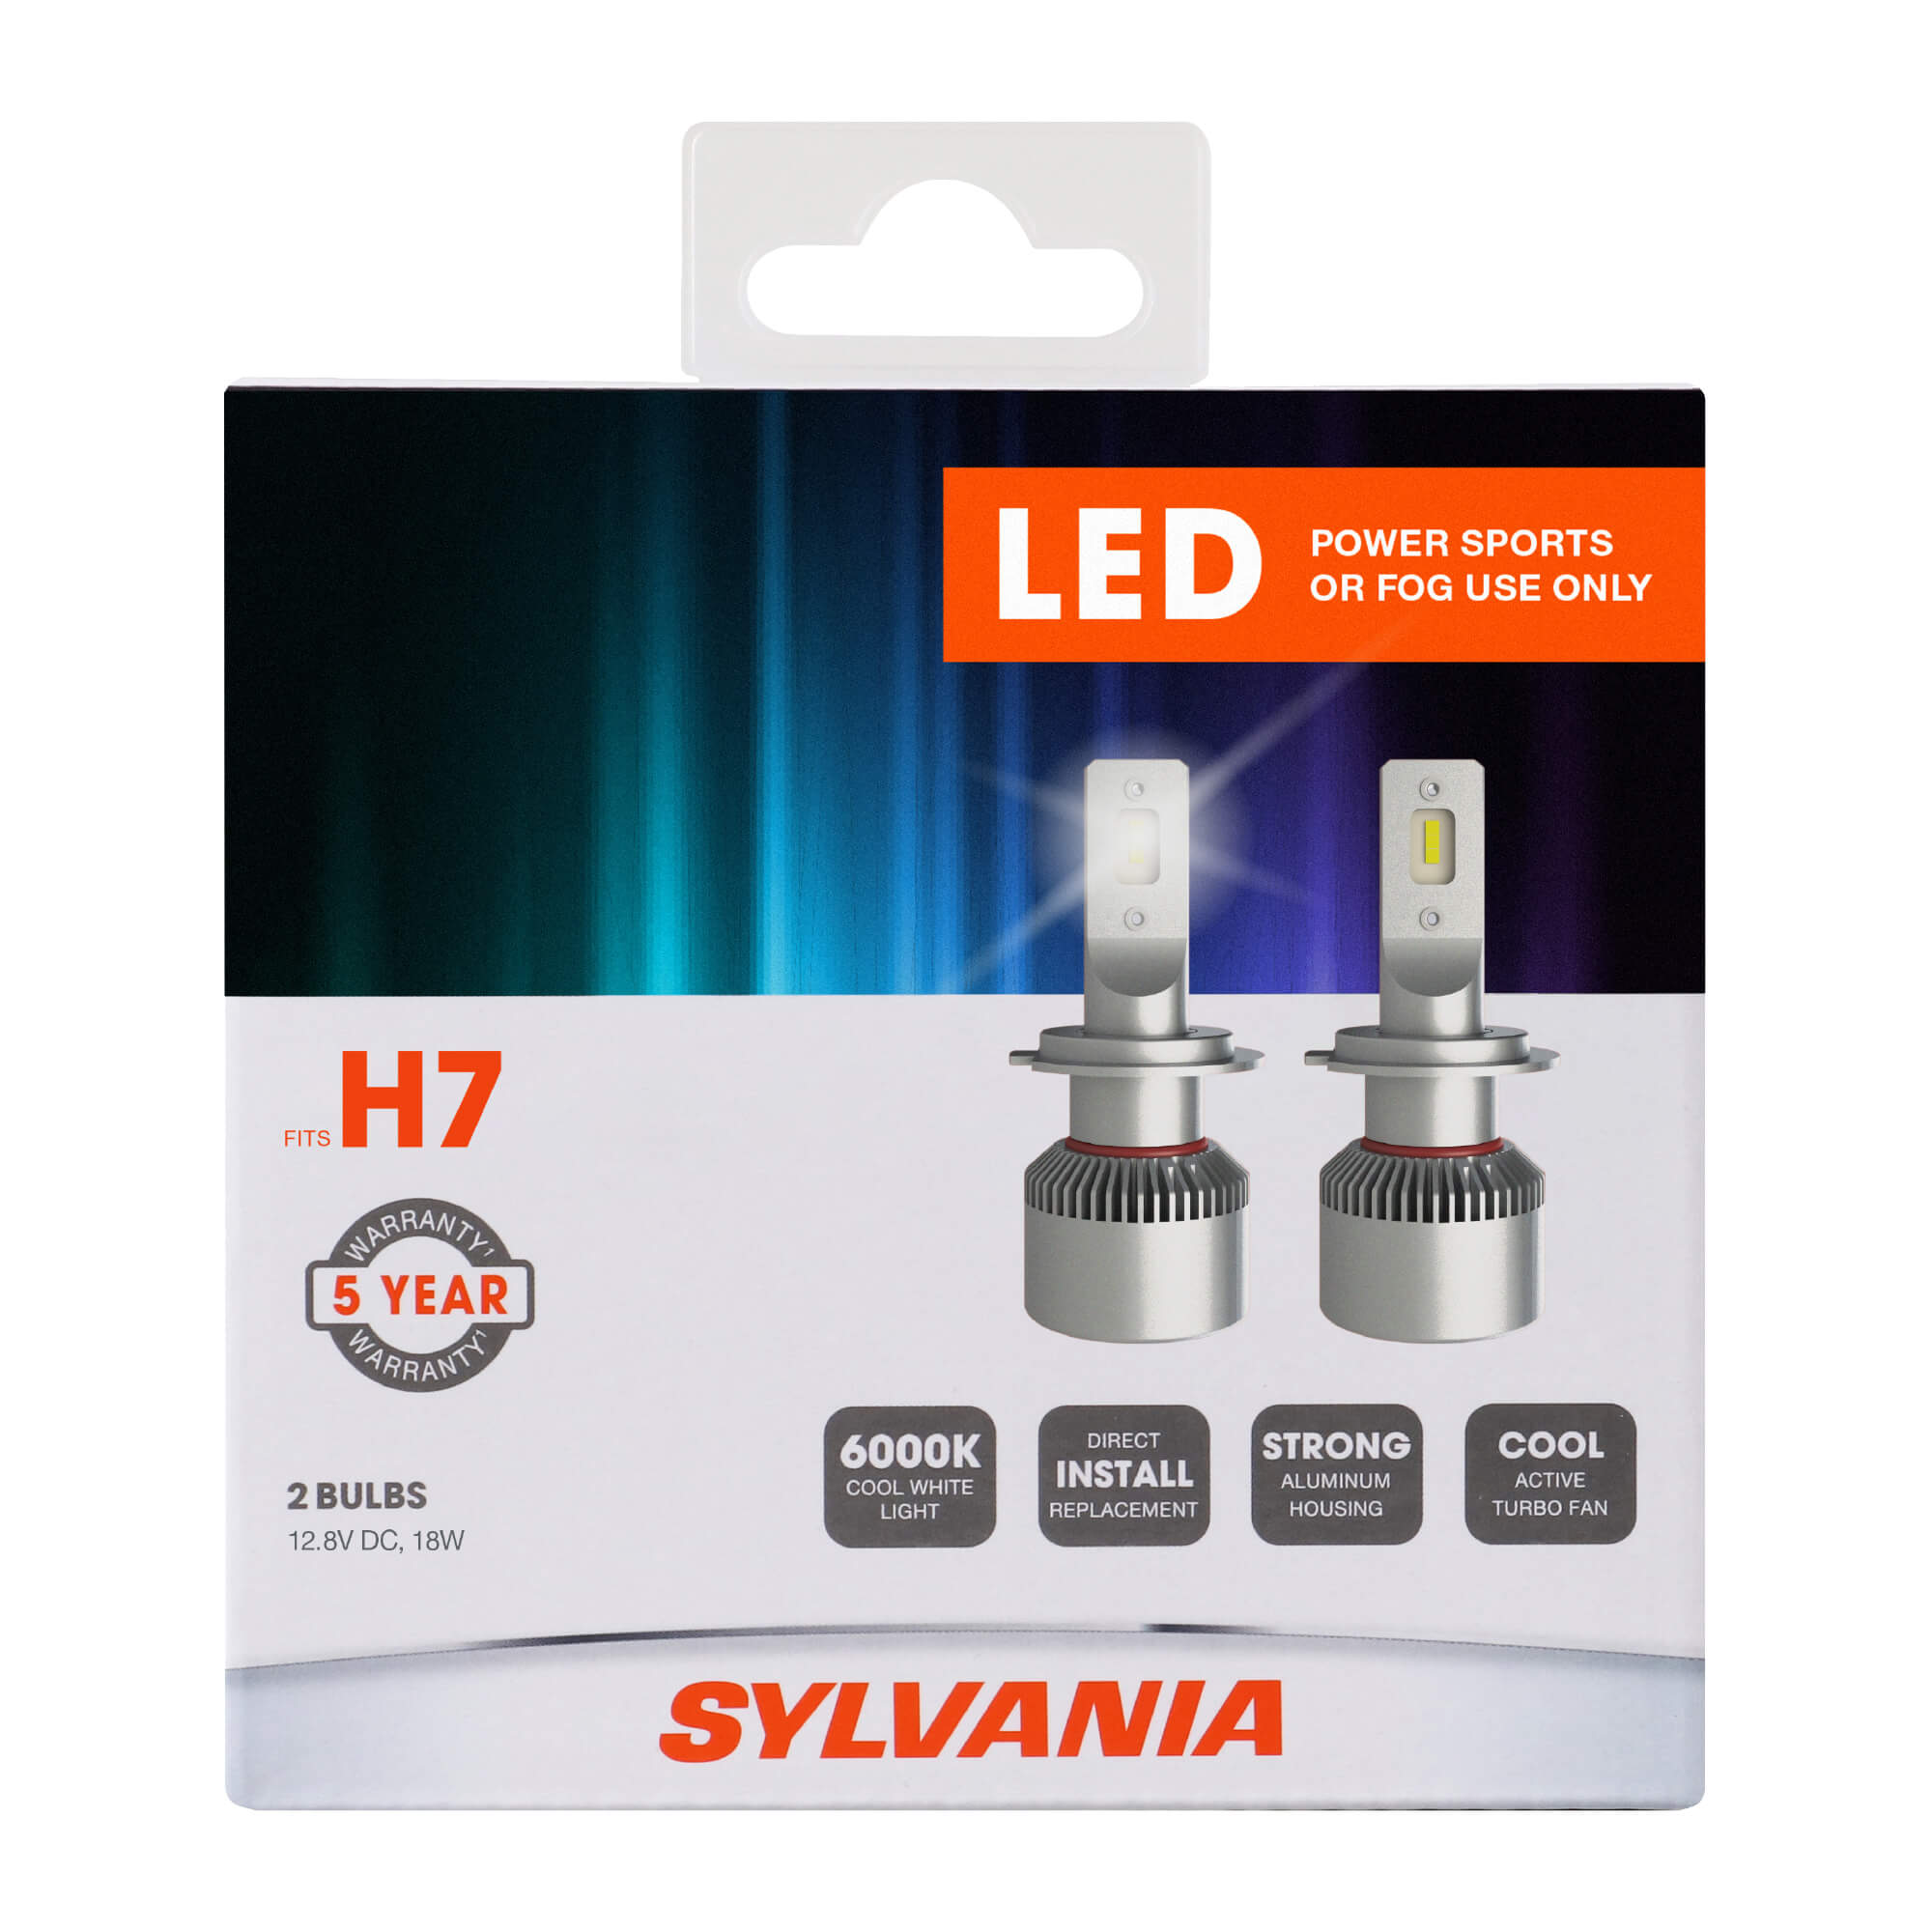 vidne Victor forhold SYLVANIA H7 LED Fog & Powersports Bulb, 2 Pack